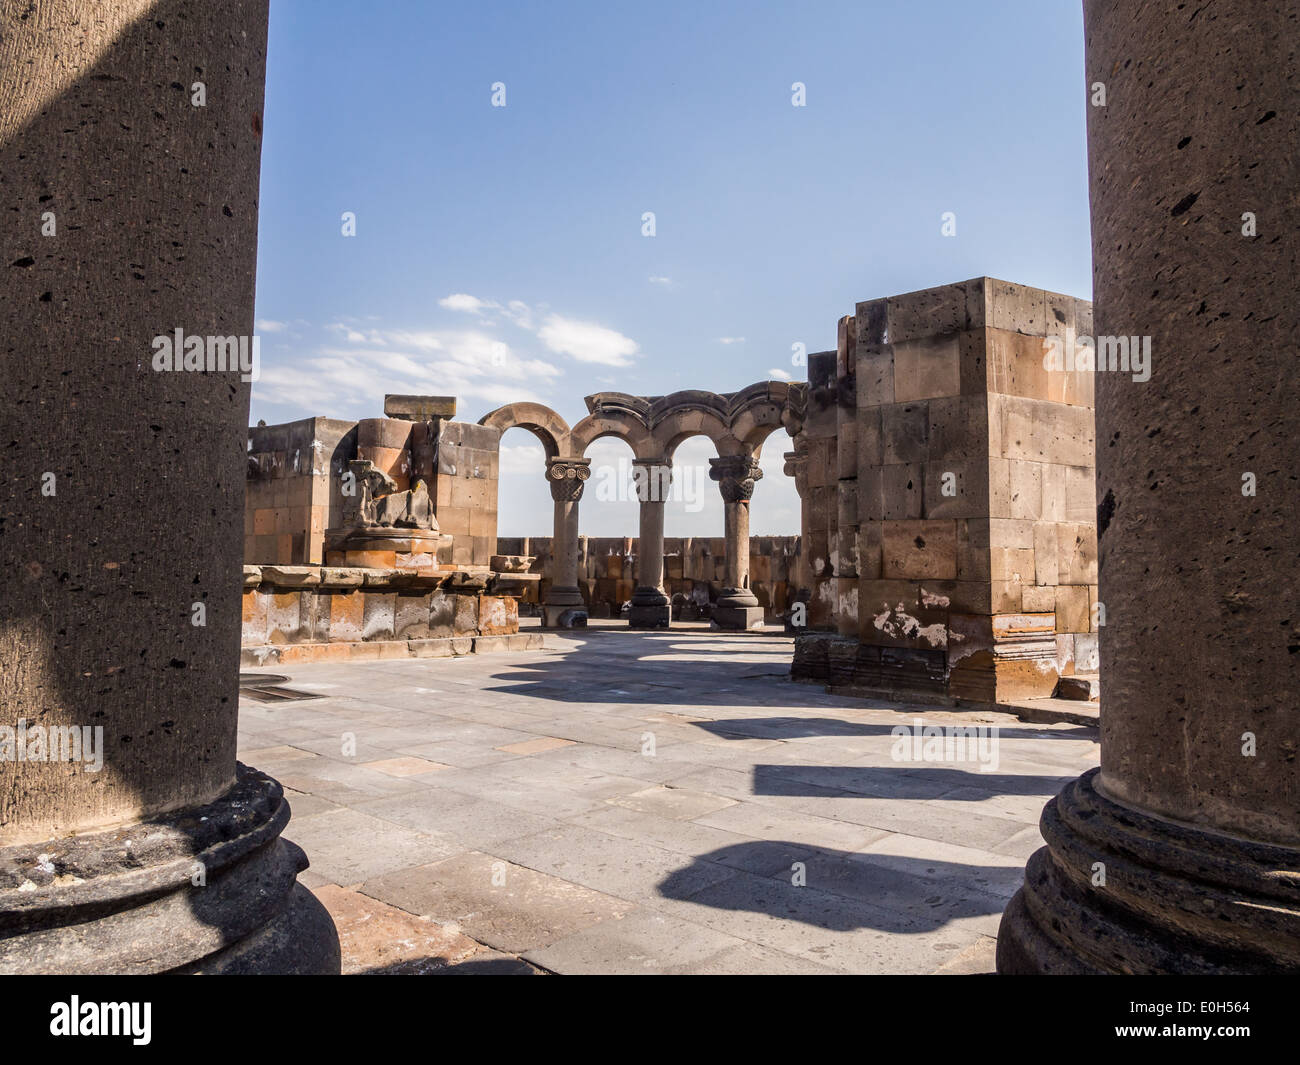 Ruins of the Zvartnots Cathedral in Armenia. Stock Photo